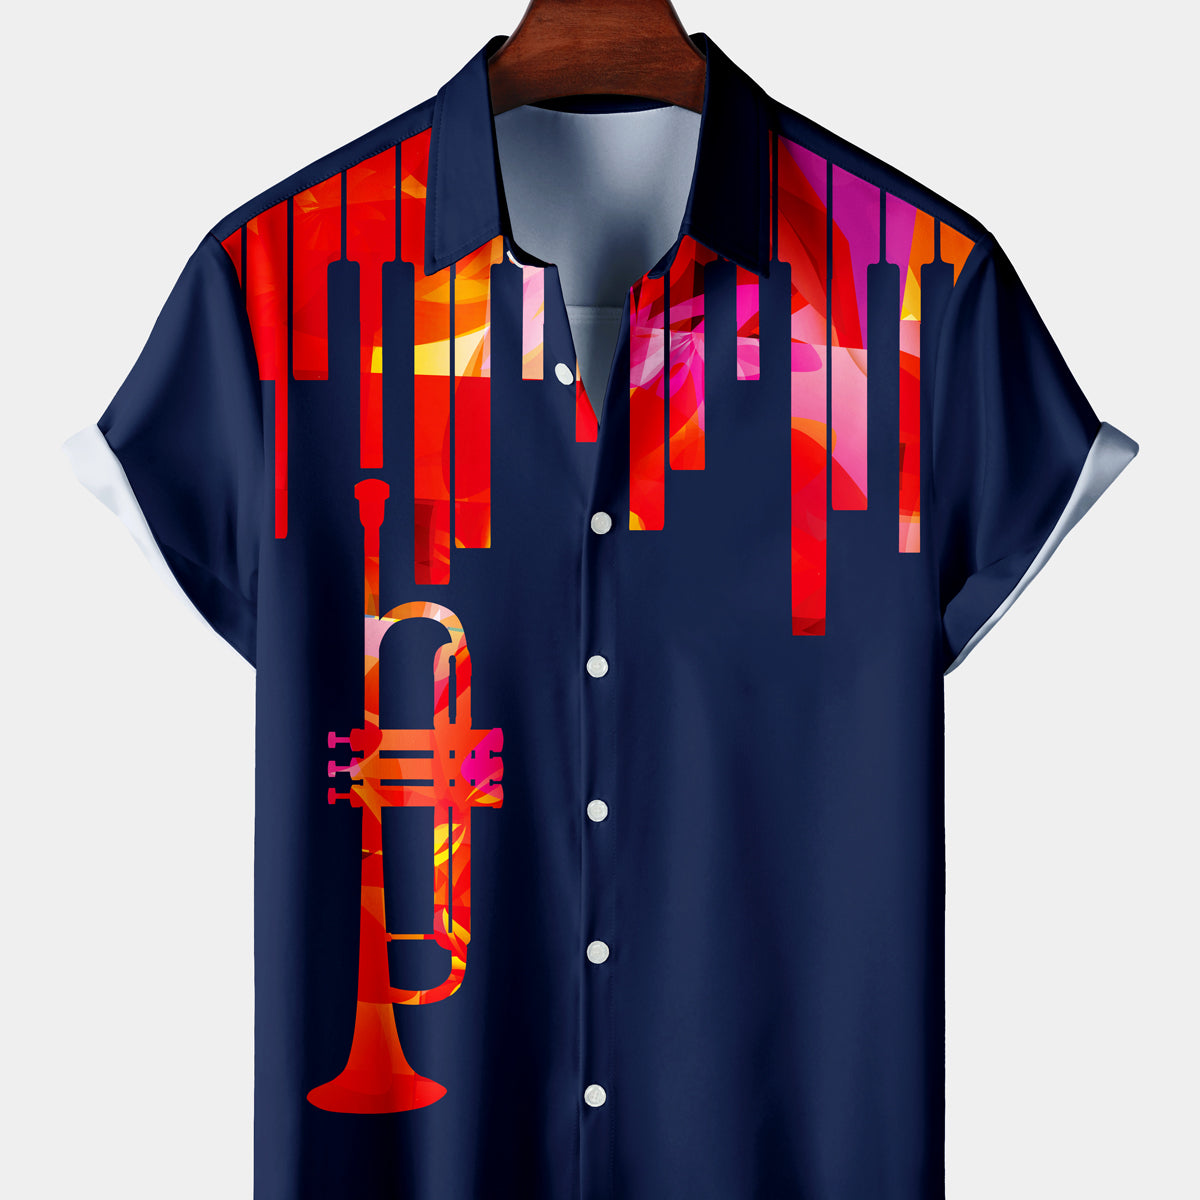 Men's Casual Music Small Navy Blue Short Sleeve Shirt